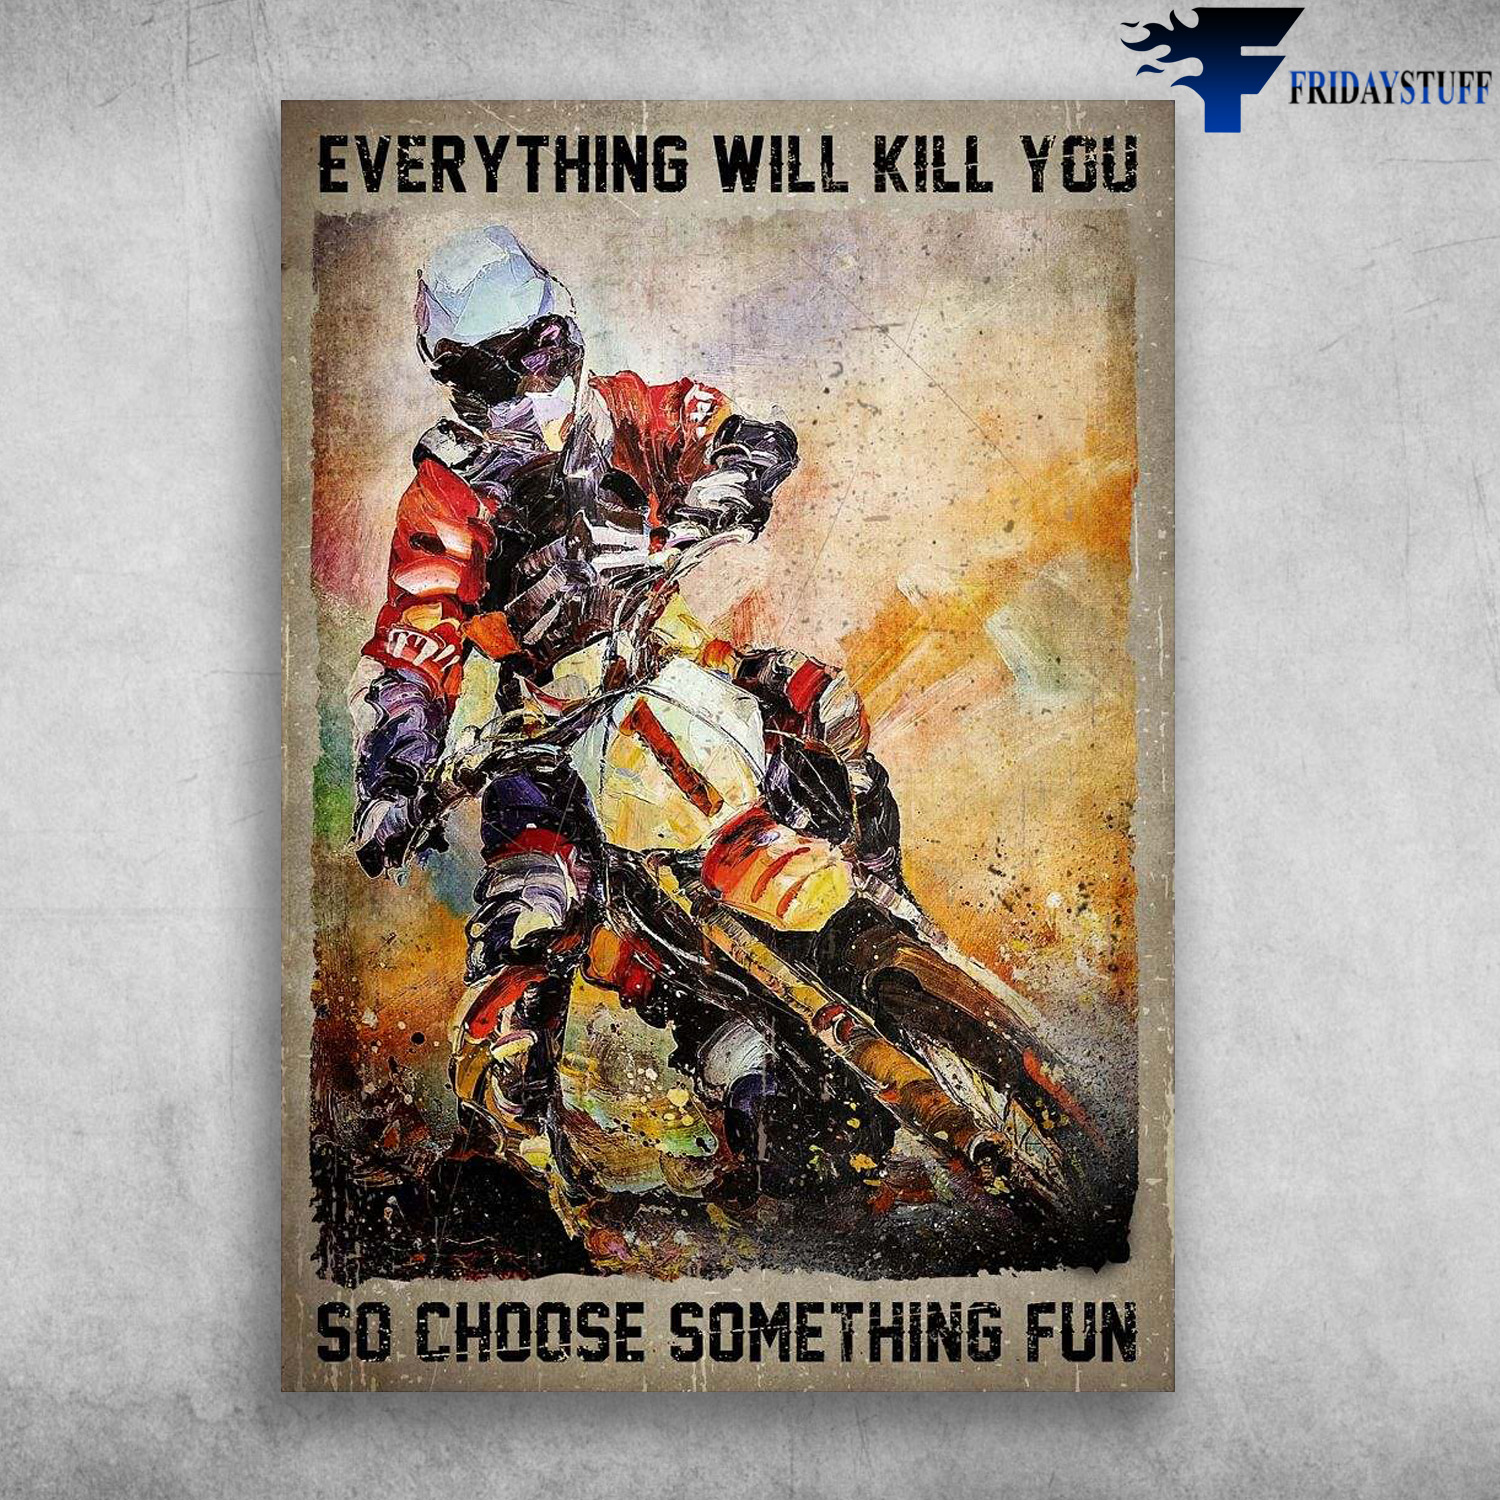 Dirt Bike, Motocross Man - Everything Will Kill You, So Choose Something Fun